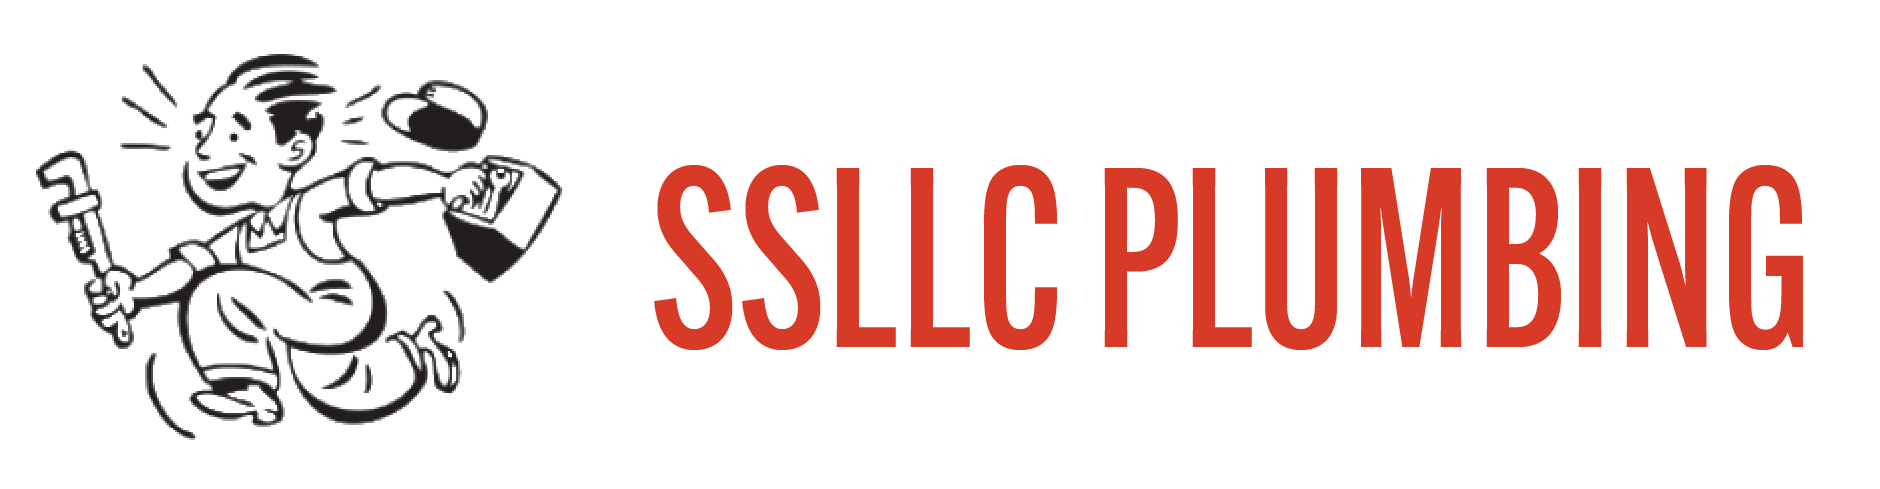 SSLLC Plumbing